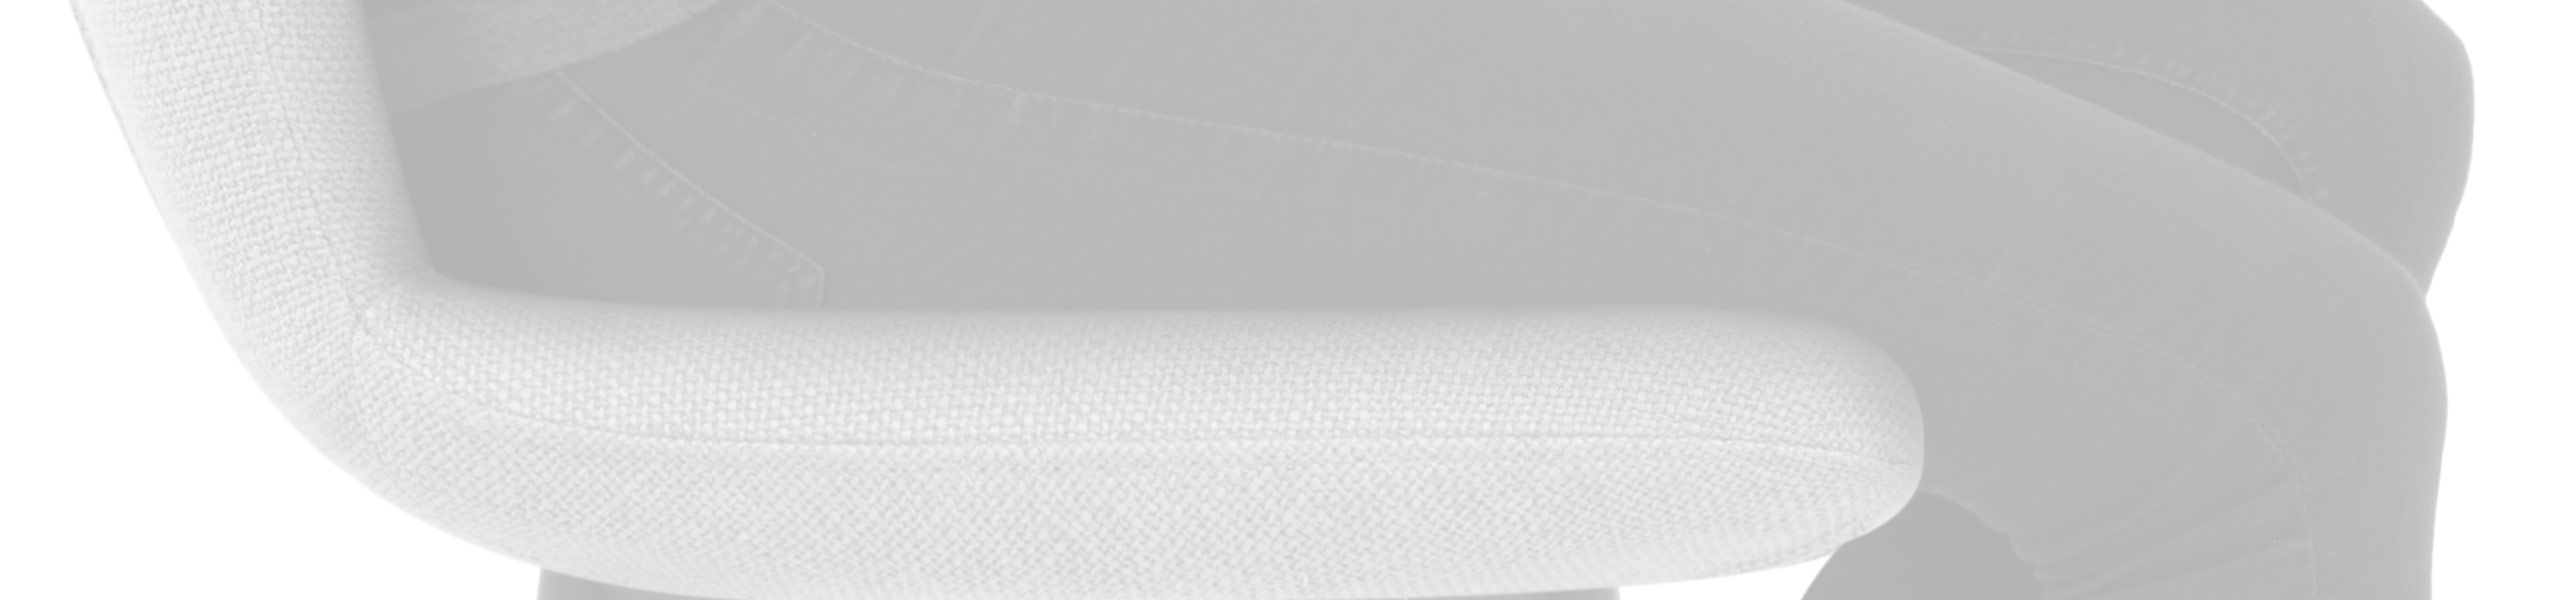 Elle Bar Stool Light Grey Fabric Review Banner